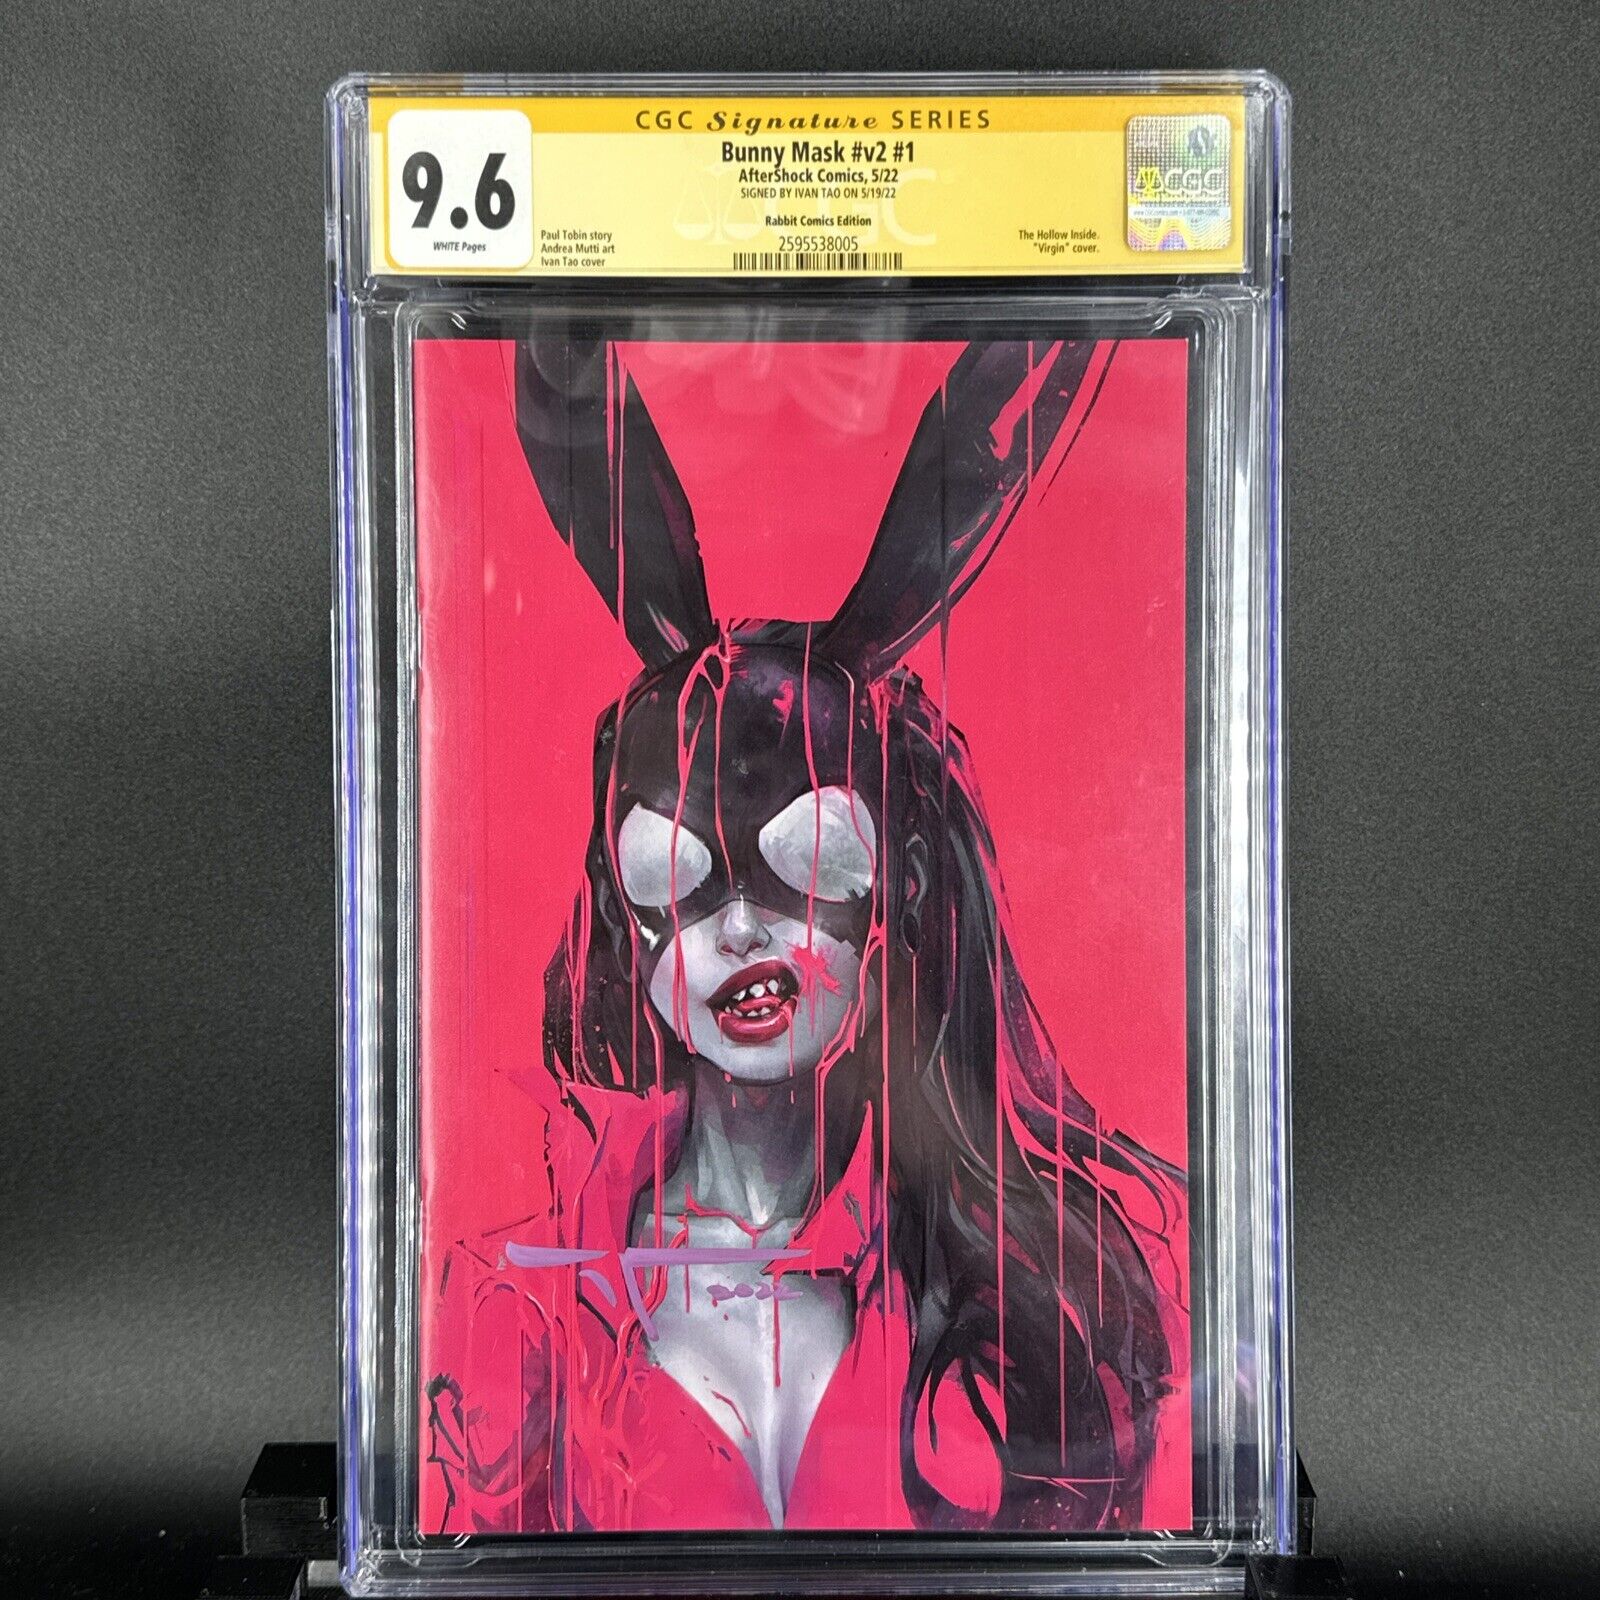 Bunny Mask Vol. 2 #1 CGC SS 9.6 Rabbit Comics Virgin Edition Signed By Ivan Tao